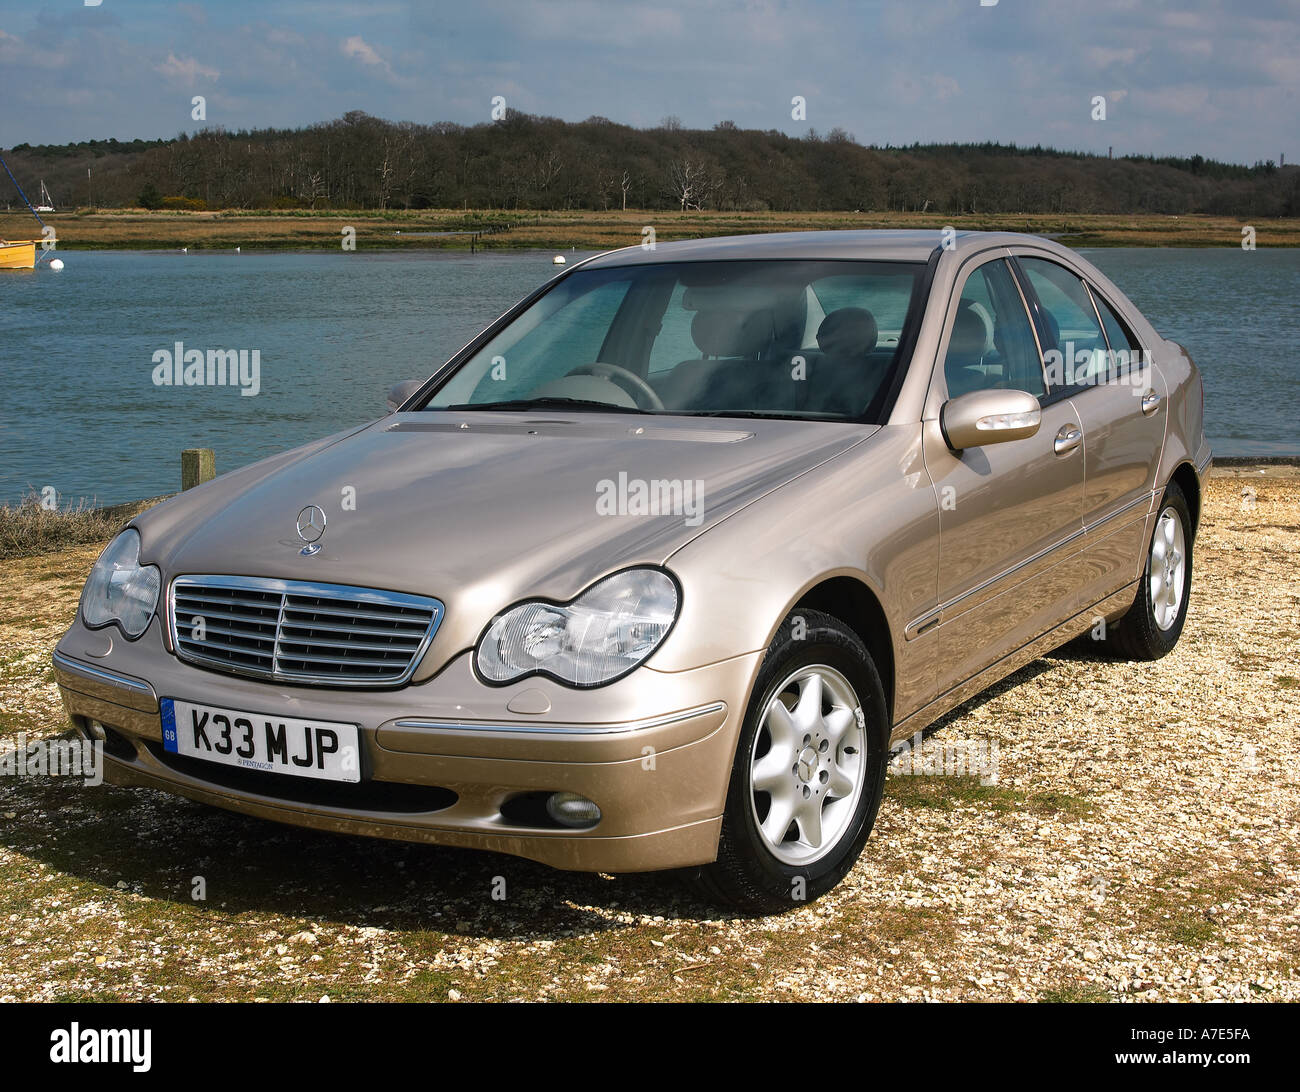 2002 Mercedes Benz C220 cdi Foto stock - Alamy